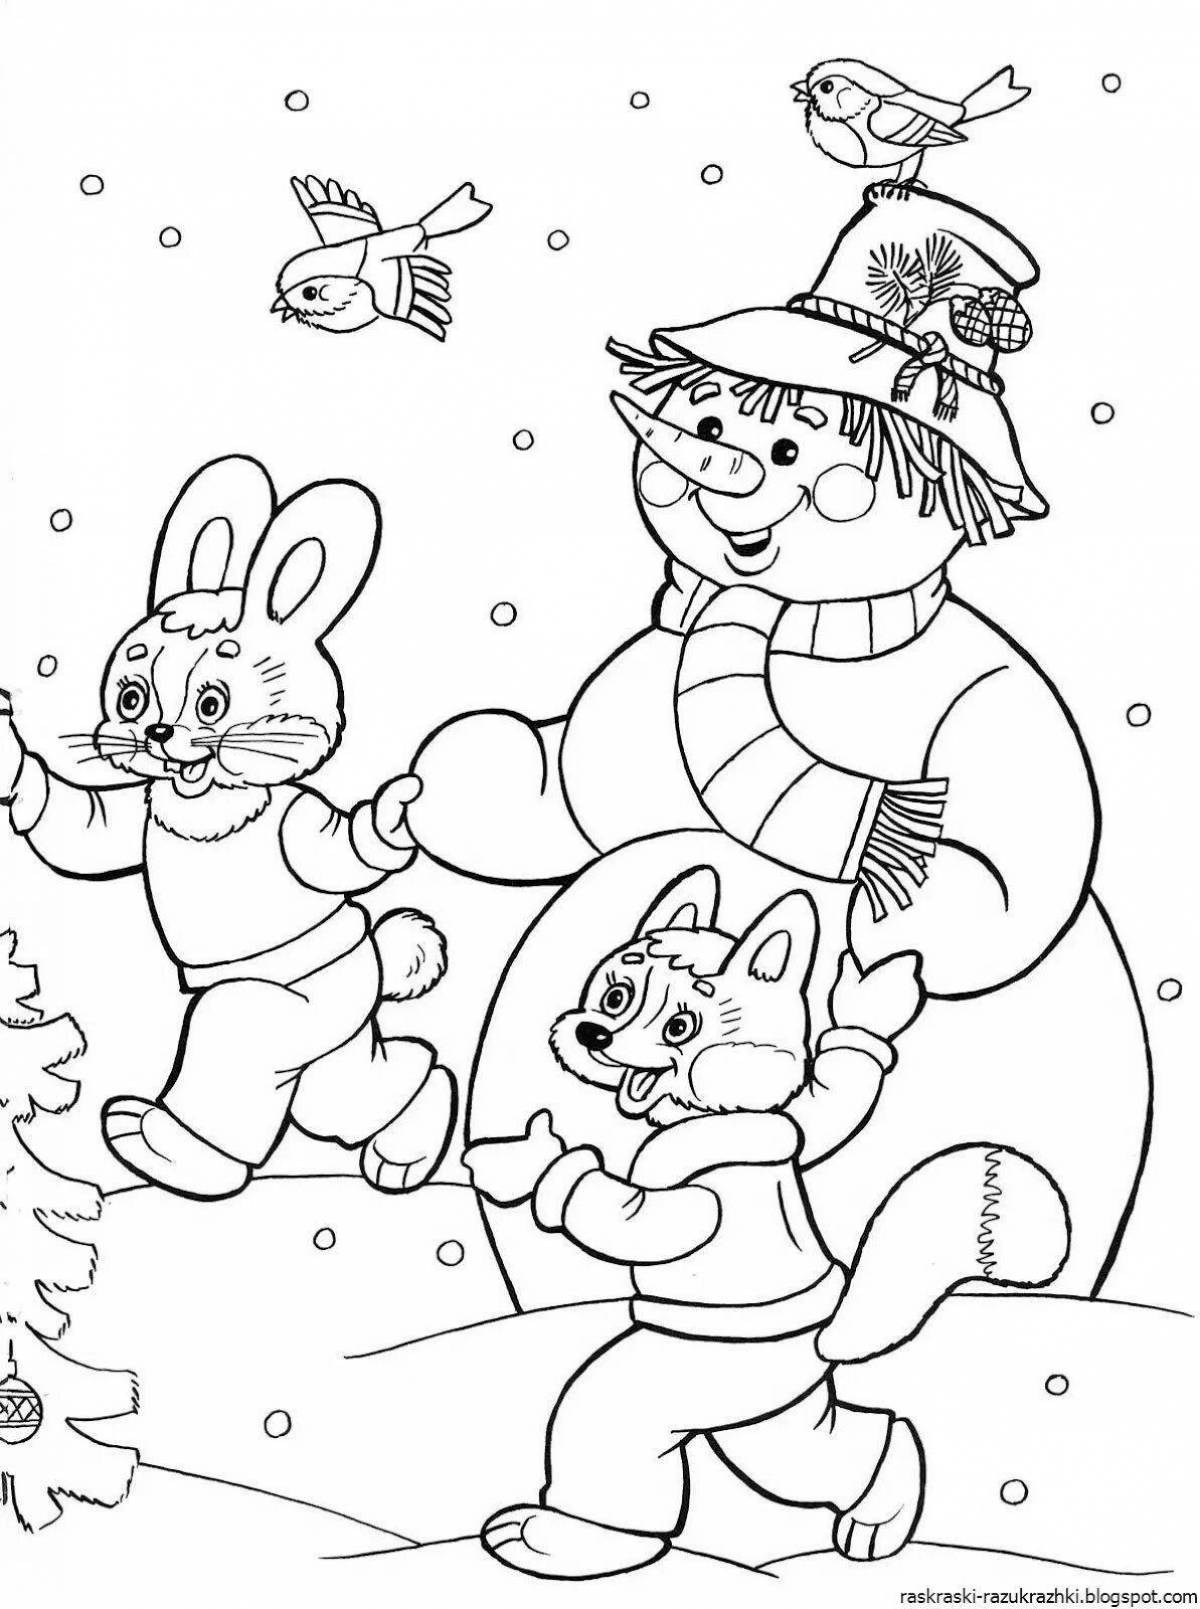 Joyful winter coloring for pre-k